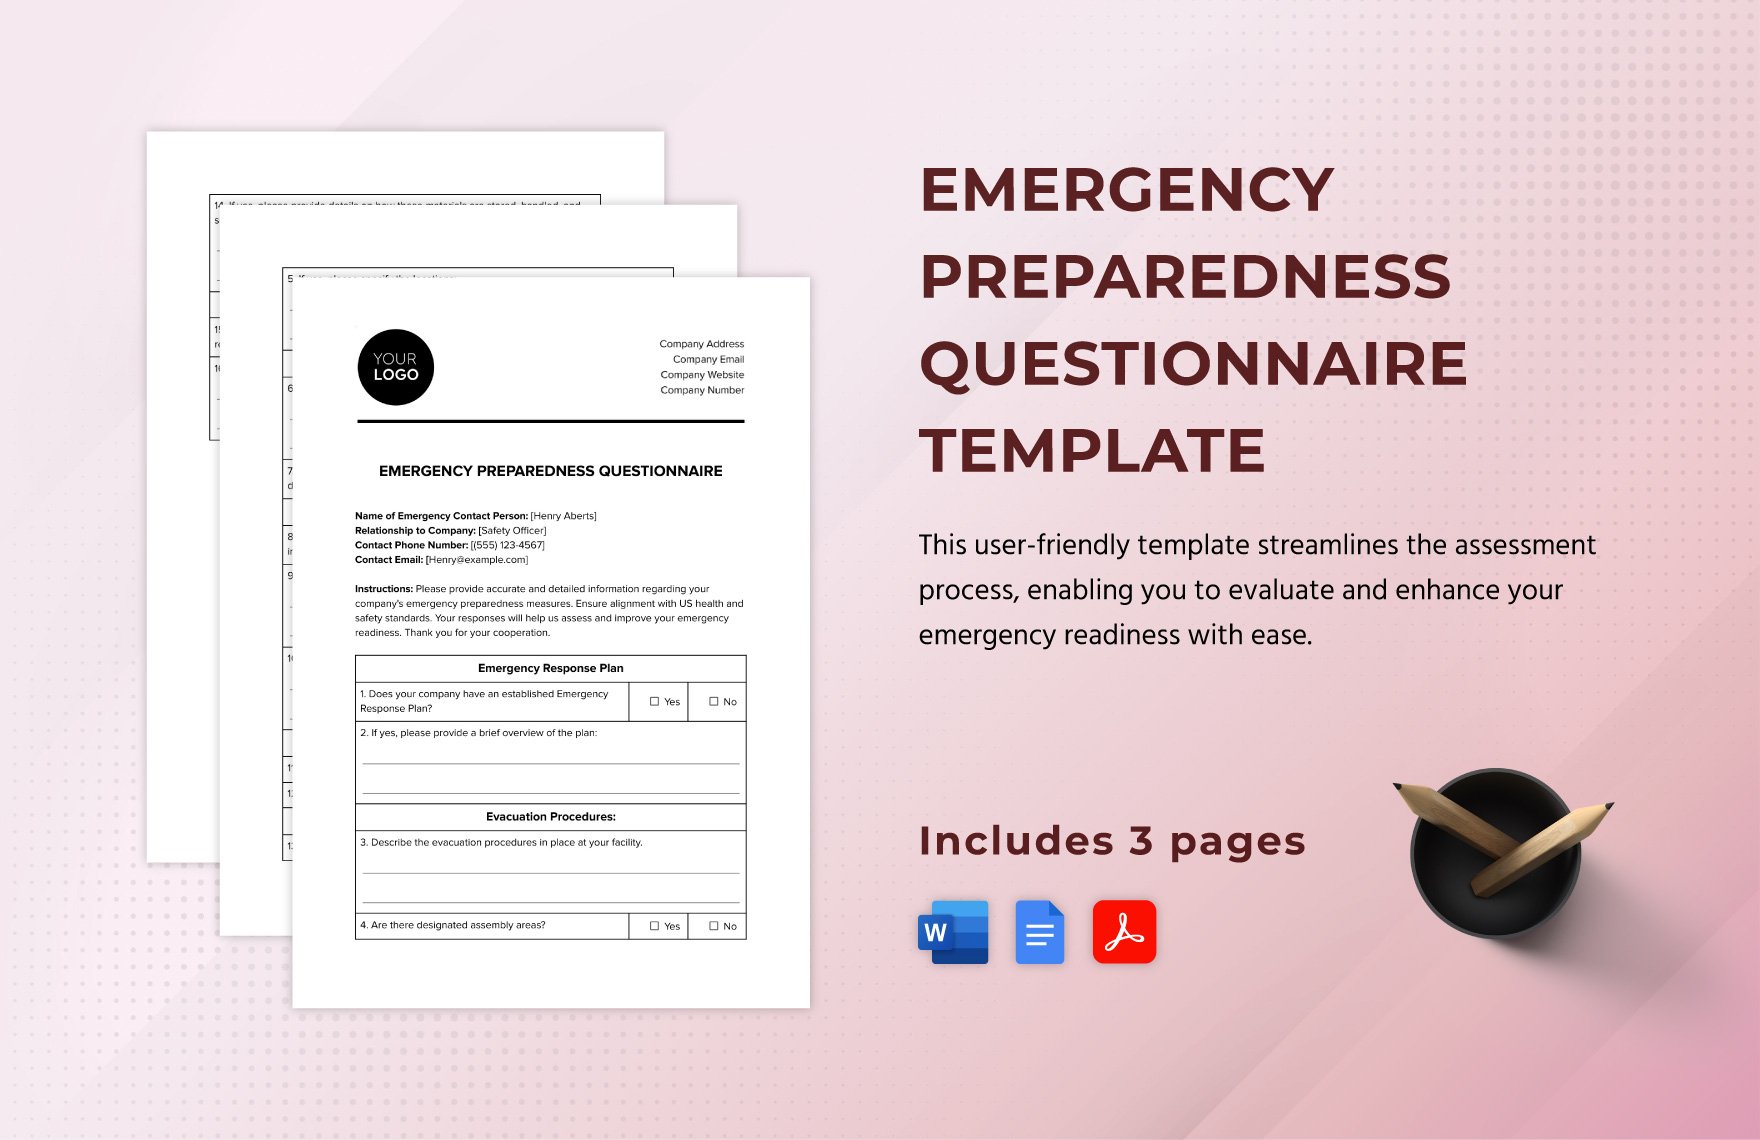 Emergency Preparedness Questionnaire Template in Word, Google Docs, PDF